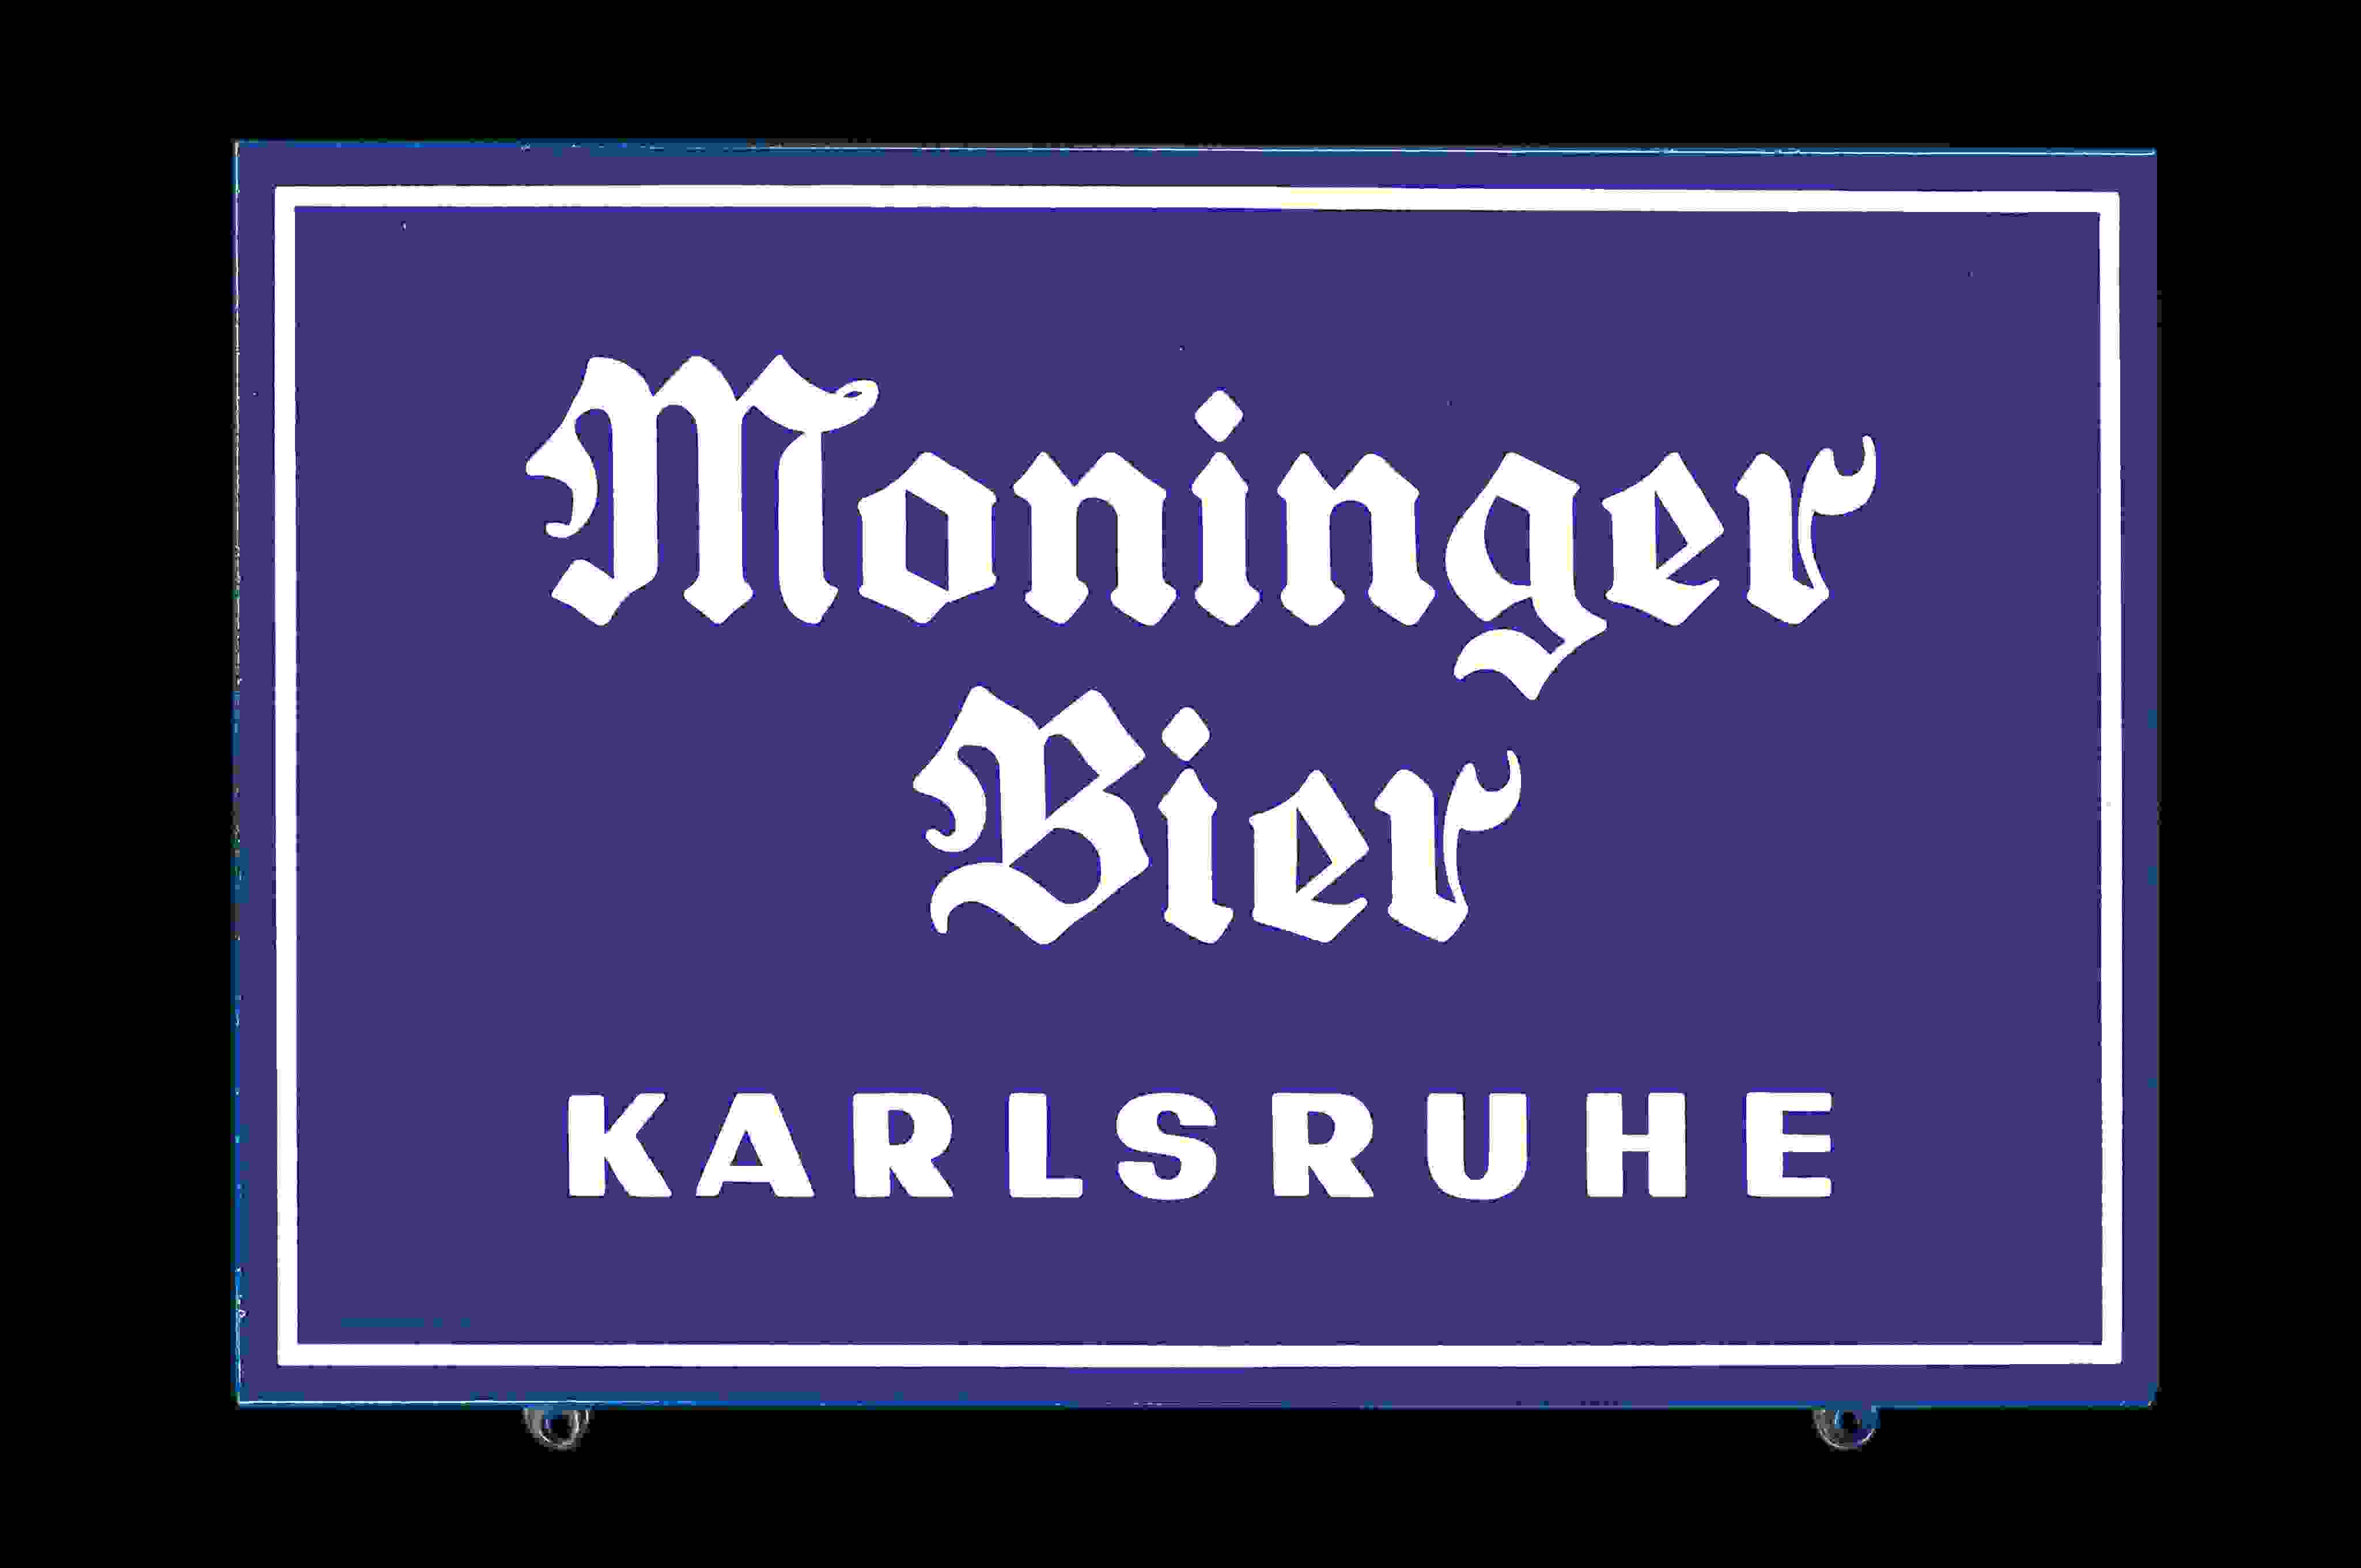 Moninger Bier 